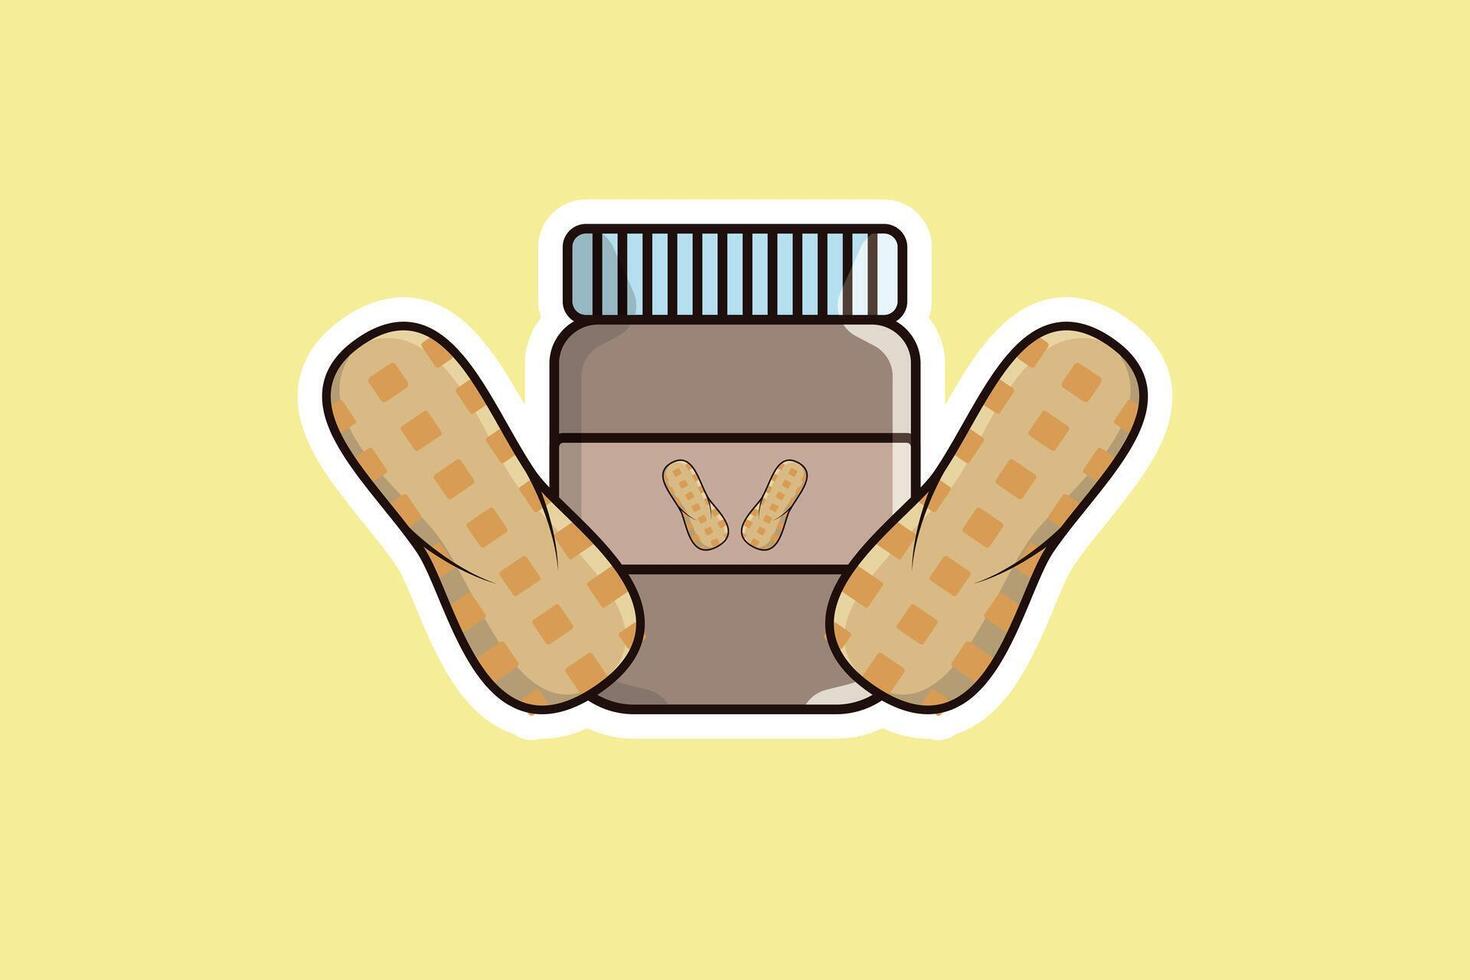 Peanut Butter Jar with Peanuts Sticker vector illustration. Food object icon concept. Peanut butter jars with sticker labels. Peanut butter packaging sticker design concept.